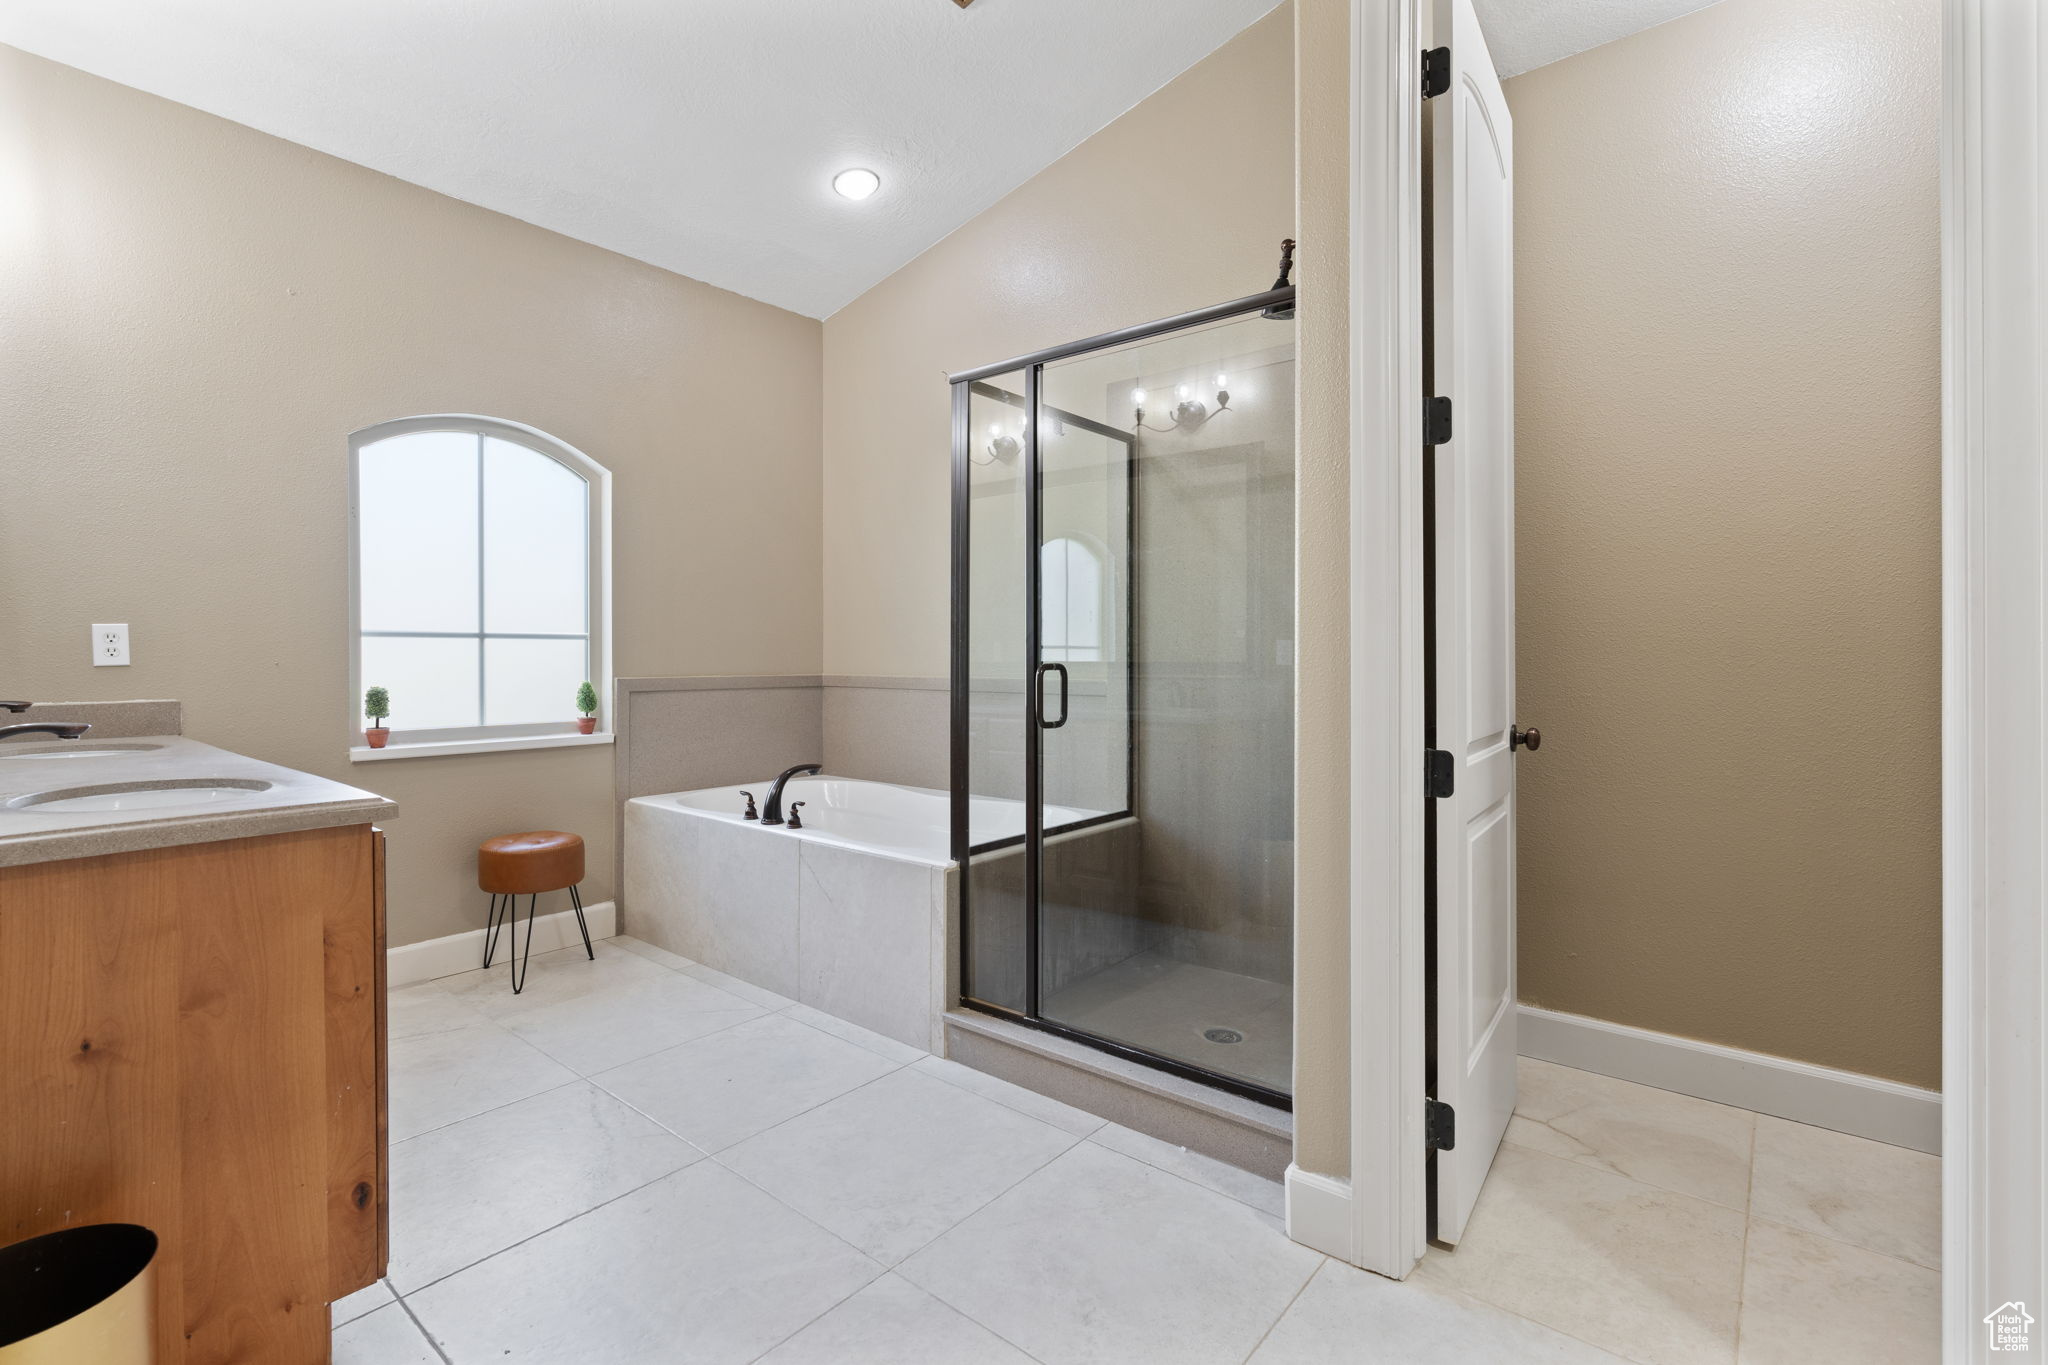 Bathroom with tile flooring, vanity, vaulted ceiling, and plus walk in shower